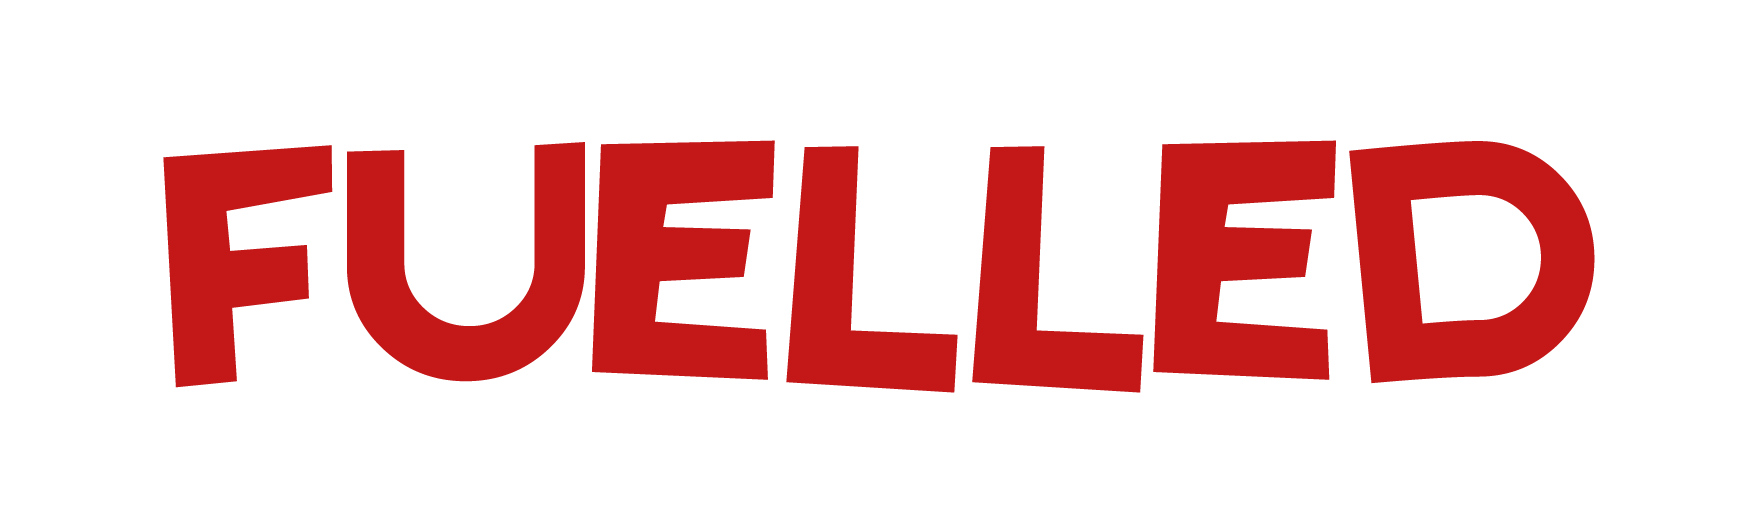 Fuelled logo image